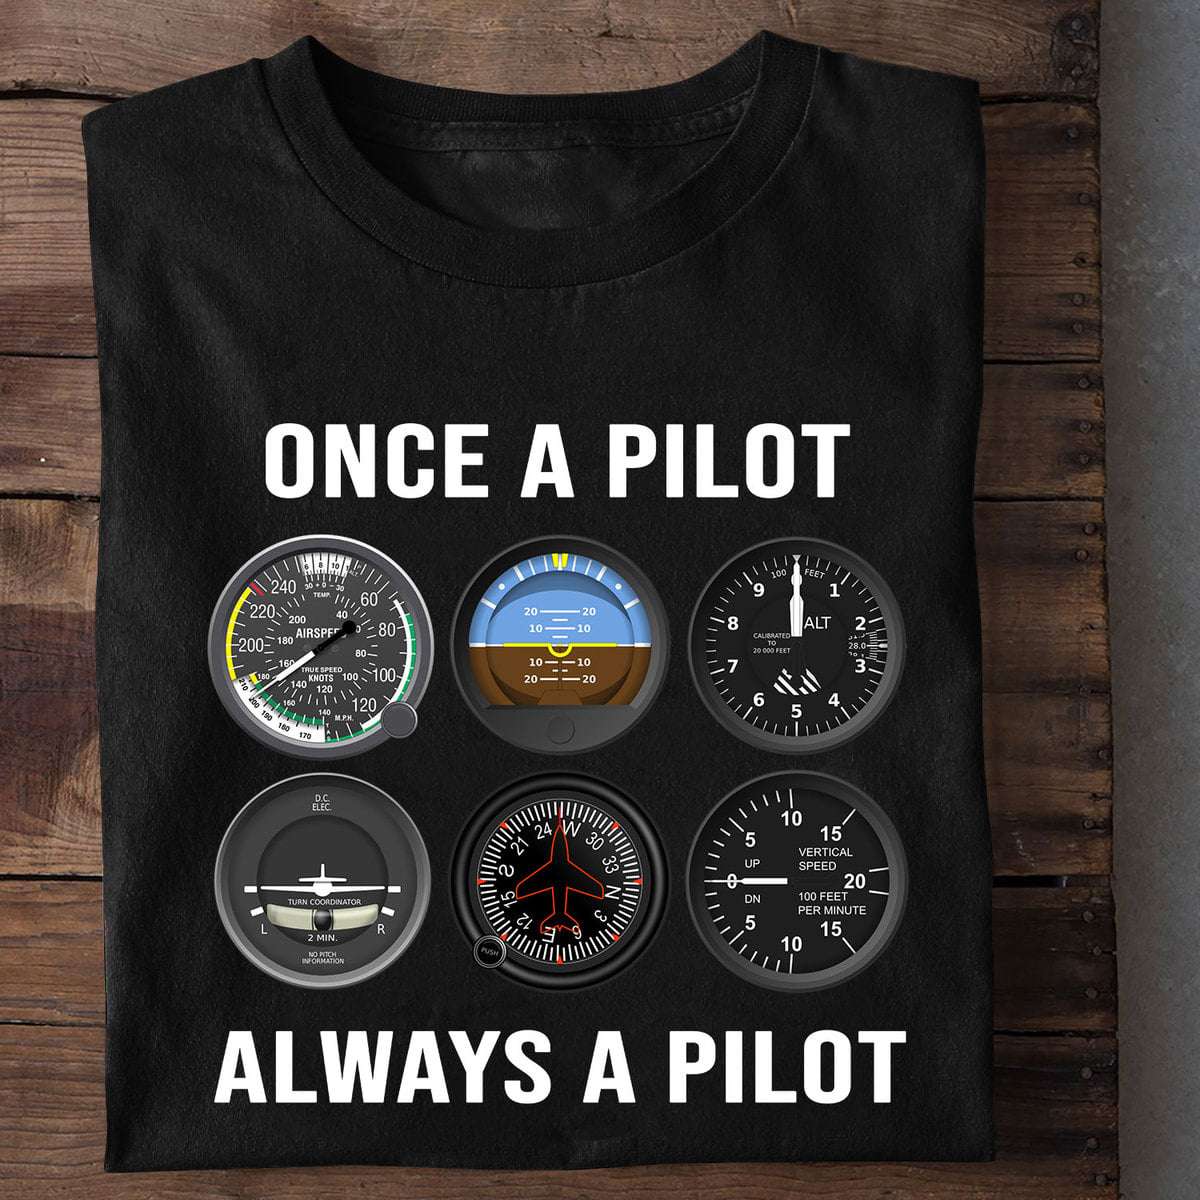 Pilot Life - Once a pilot always a pilot